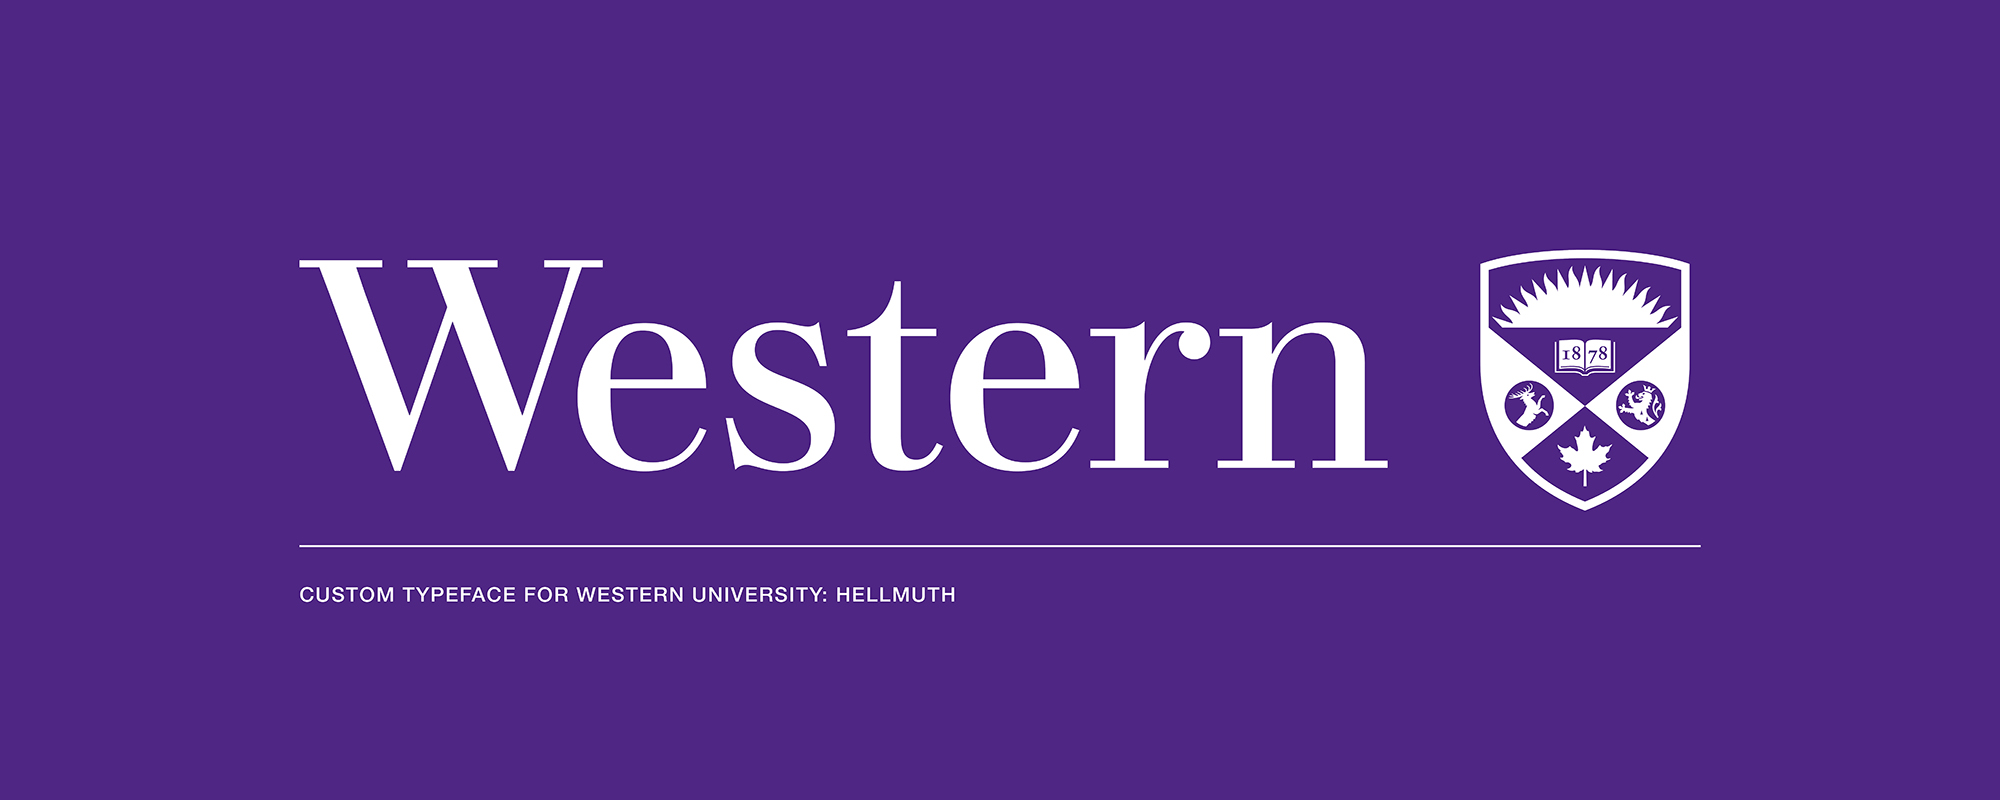 Western University banner 1